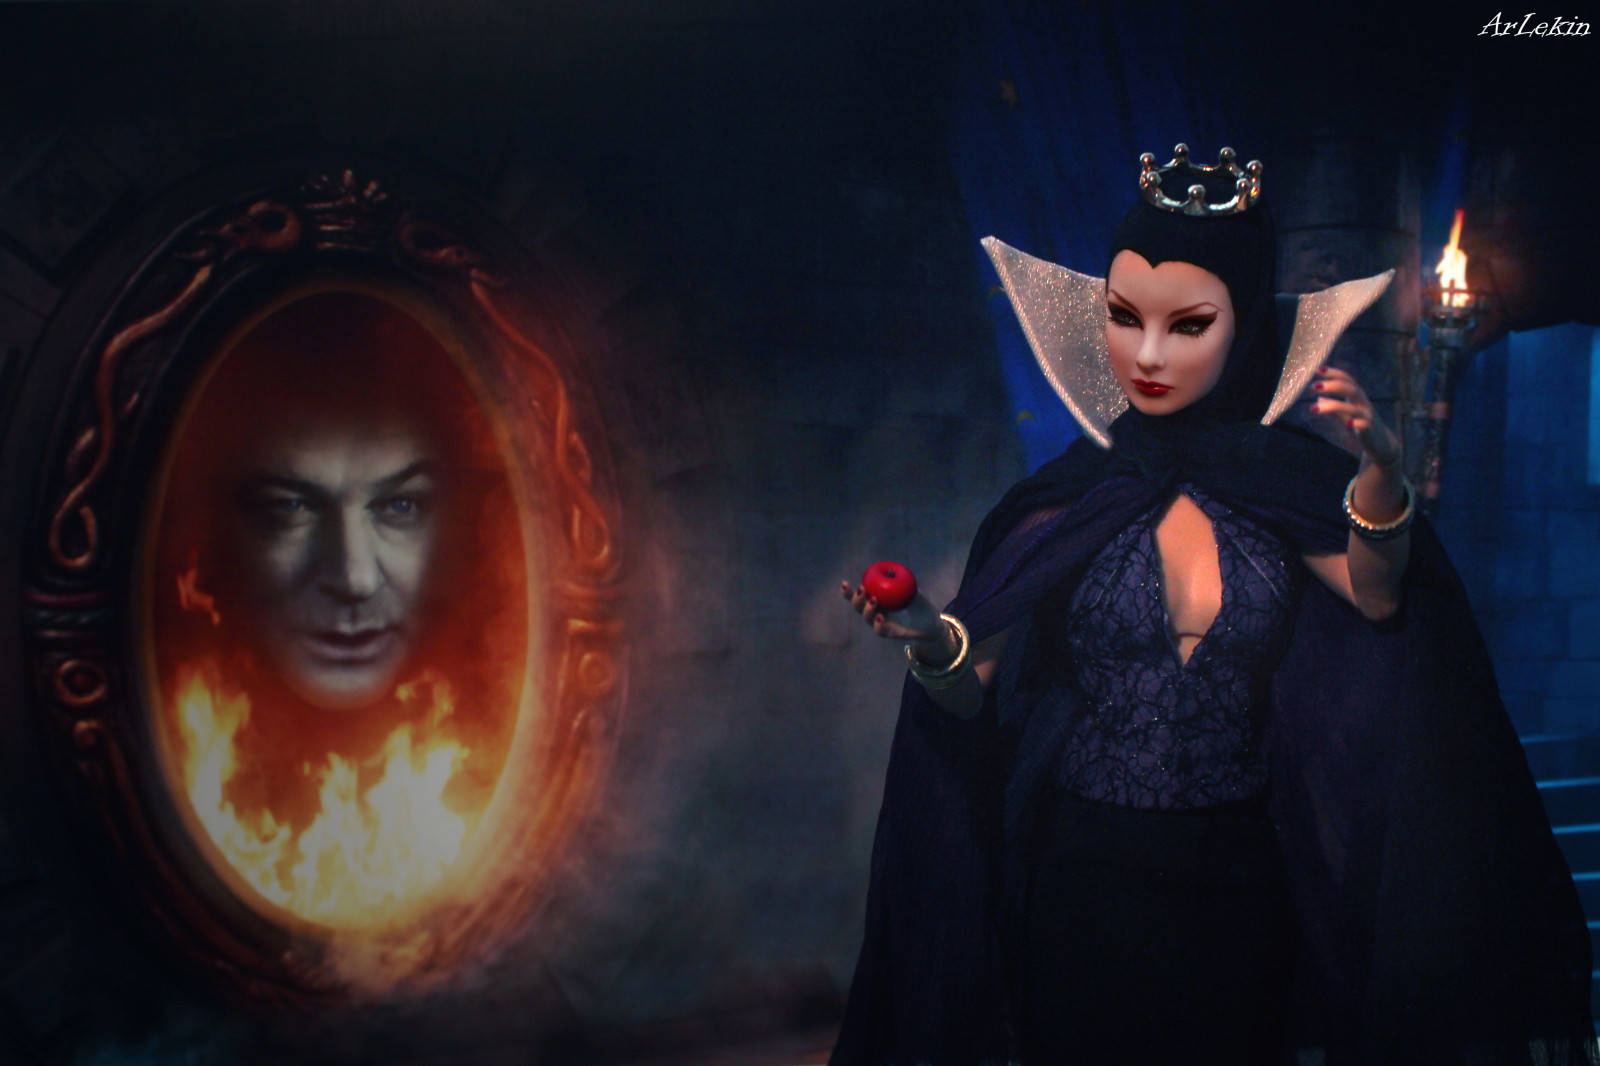 Disney Villain Maleficent With The Mirror Wallpaper